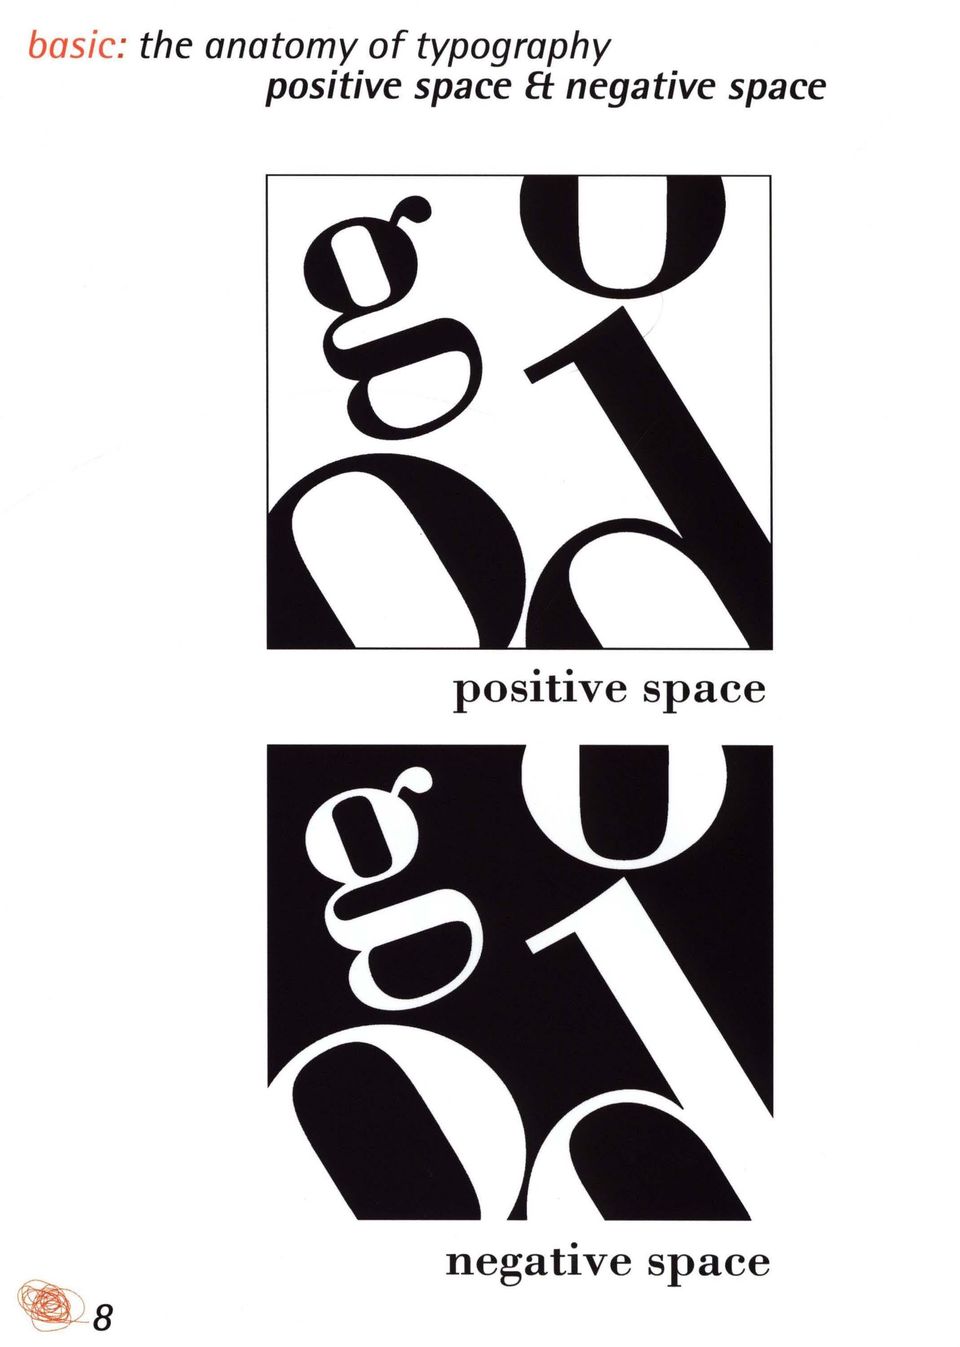 space a negative space